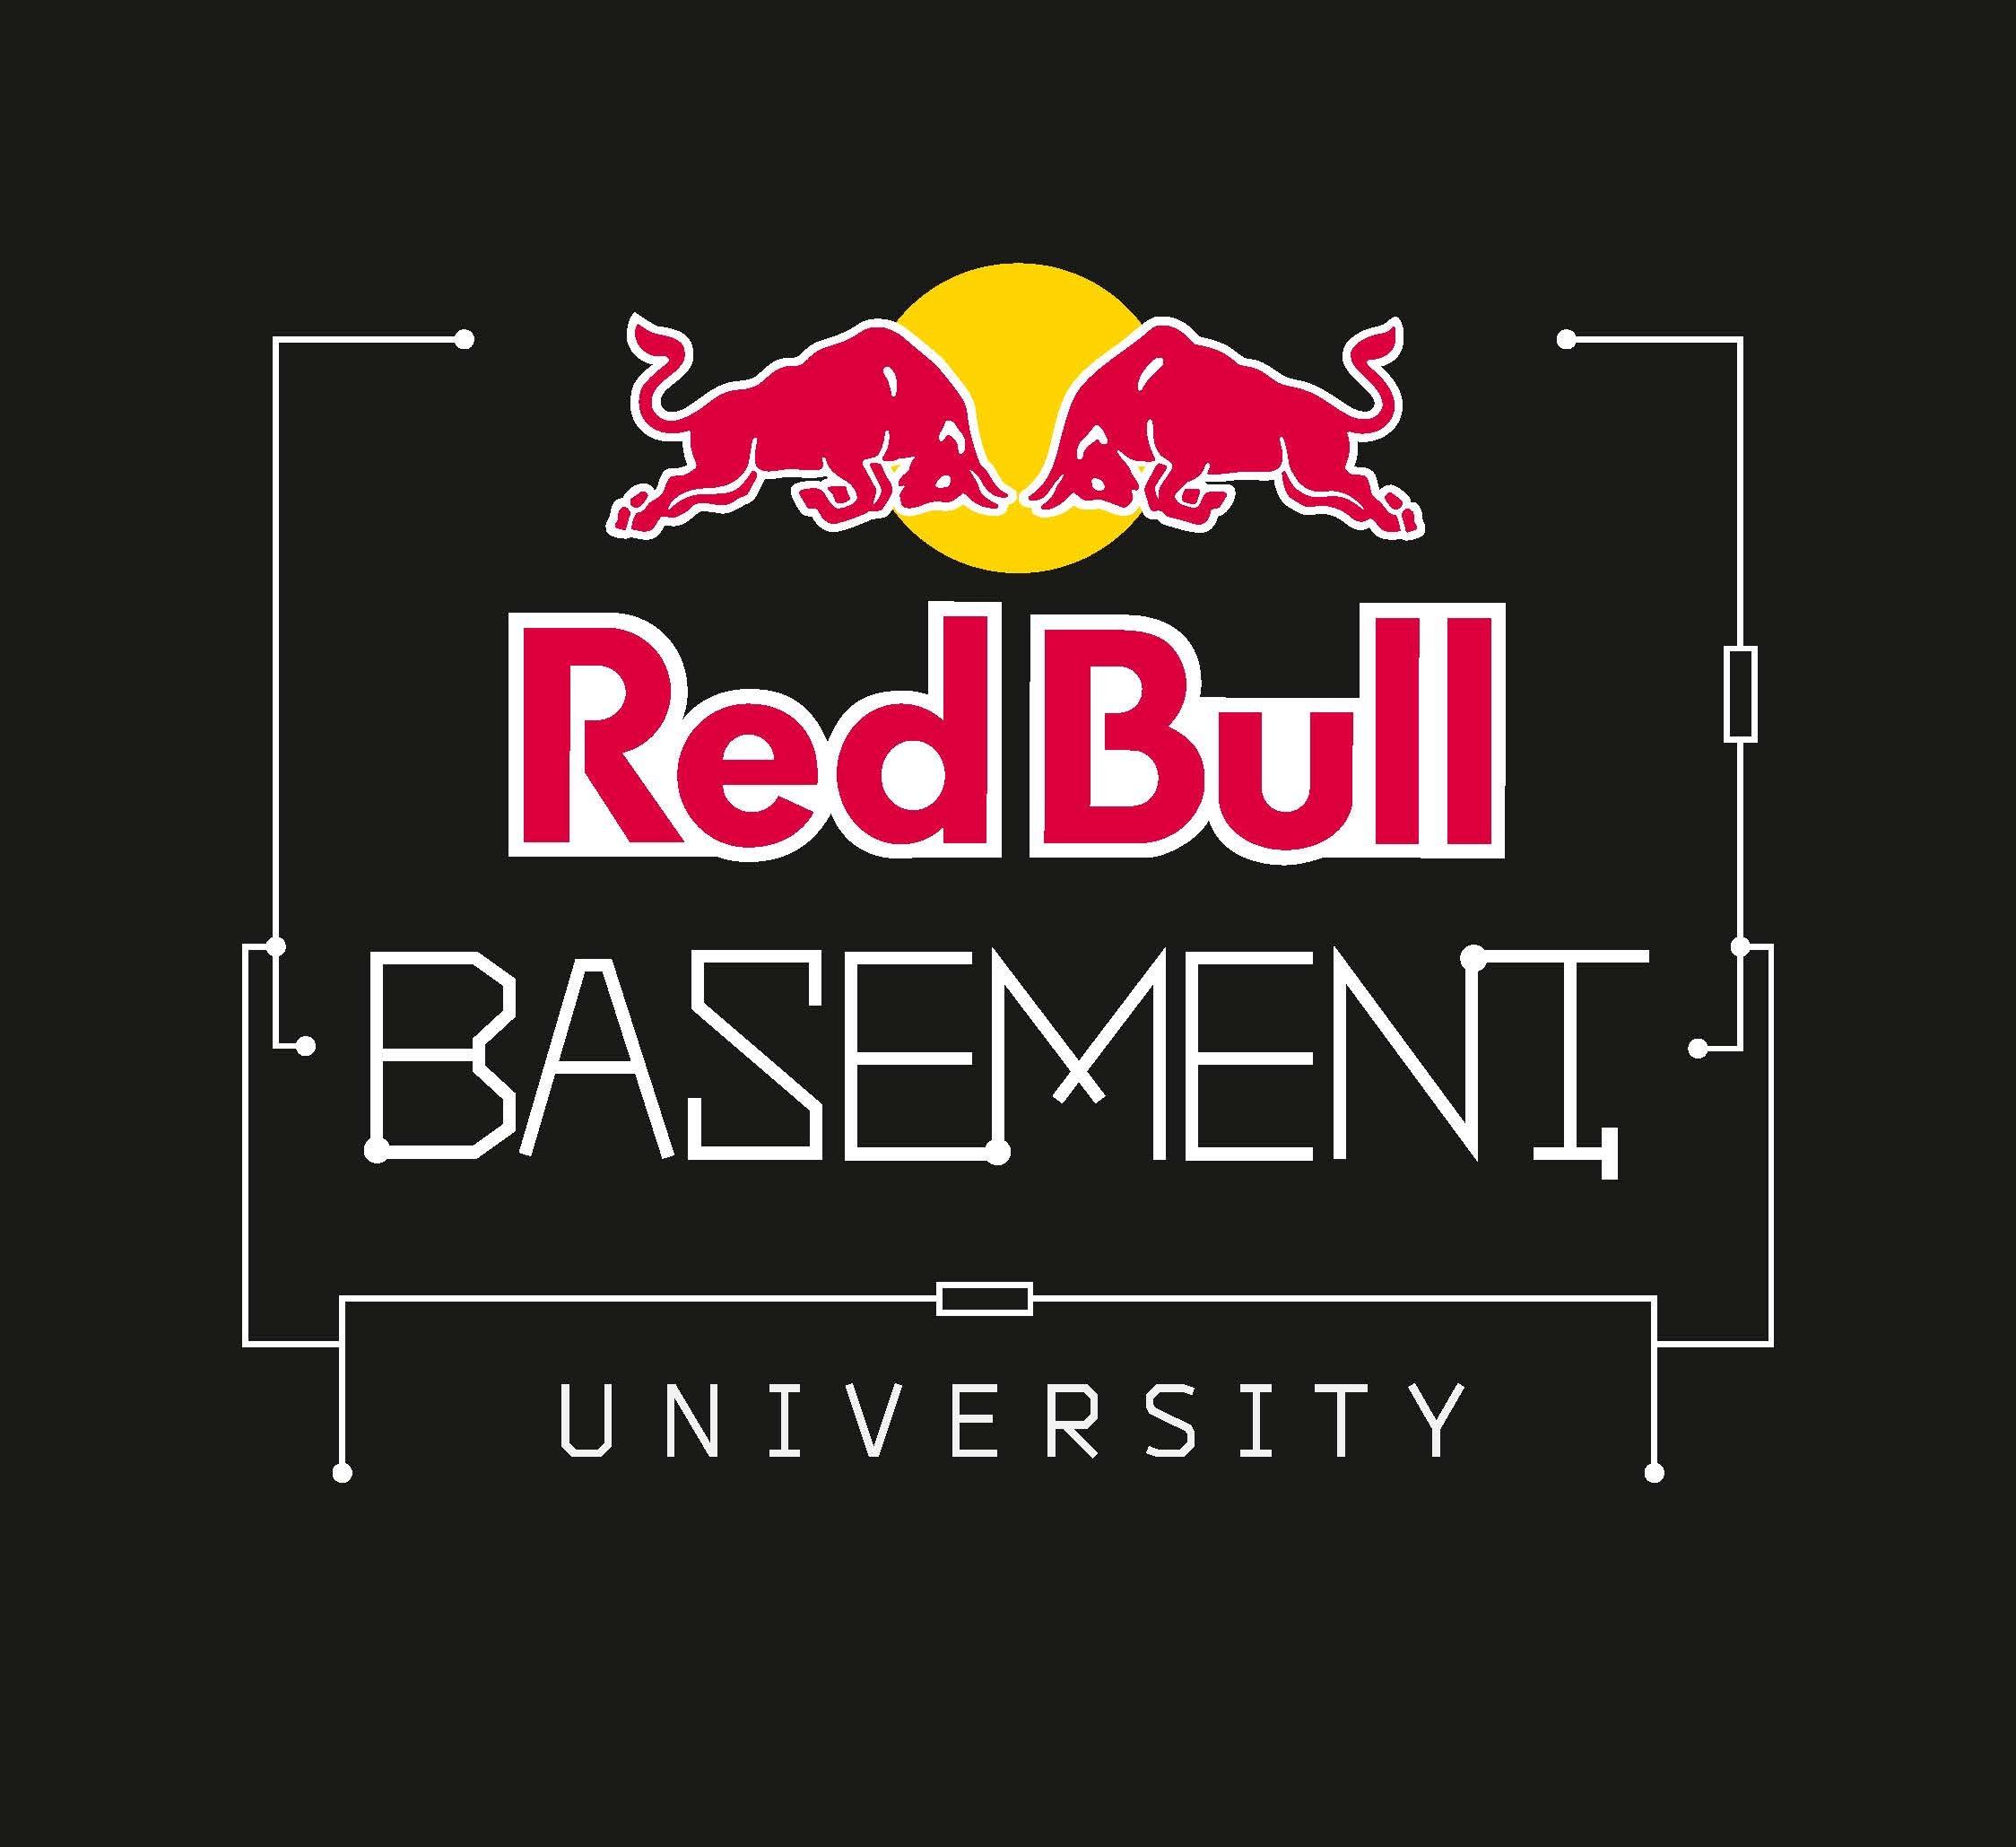 Makuake が日本初開催となるレッドブル主催のキャンパス イノベーター育成プログラム Red Bull Basement University に特別審査員として参加決定 株式会社マクアケ Makuake Inc